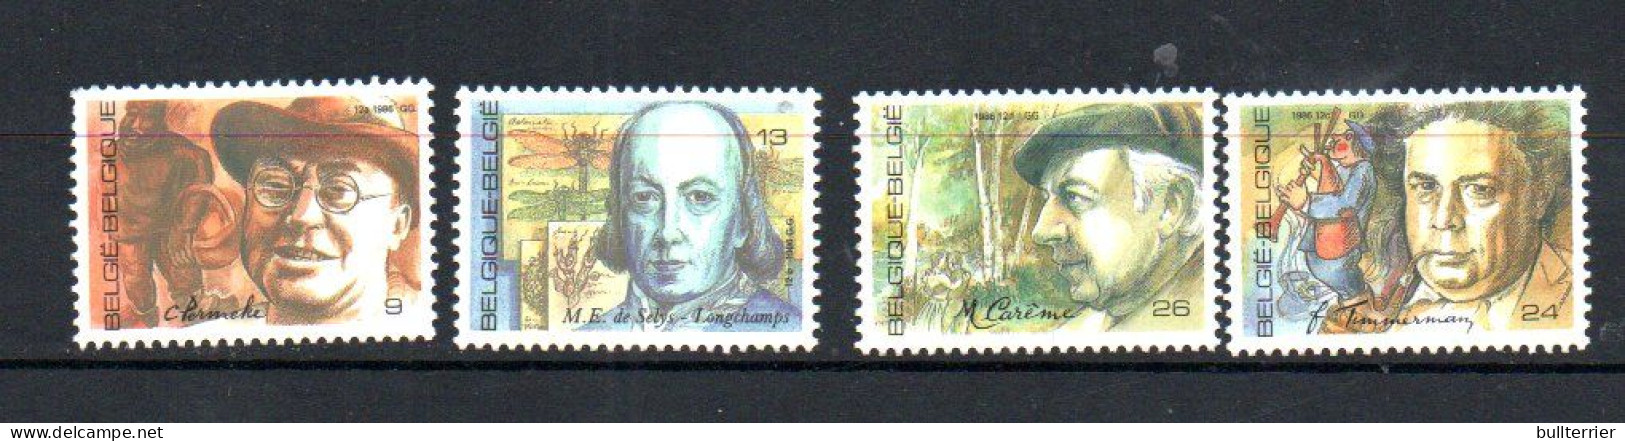 BELGIUM -1986 - CELEBRITIES SET OF 4  MINT NEVER HIGED ,  SG CAT £7.30 - Unused Stamps